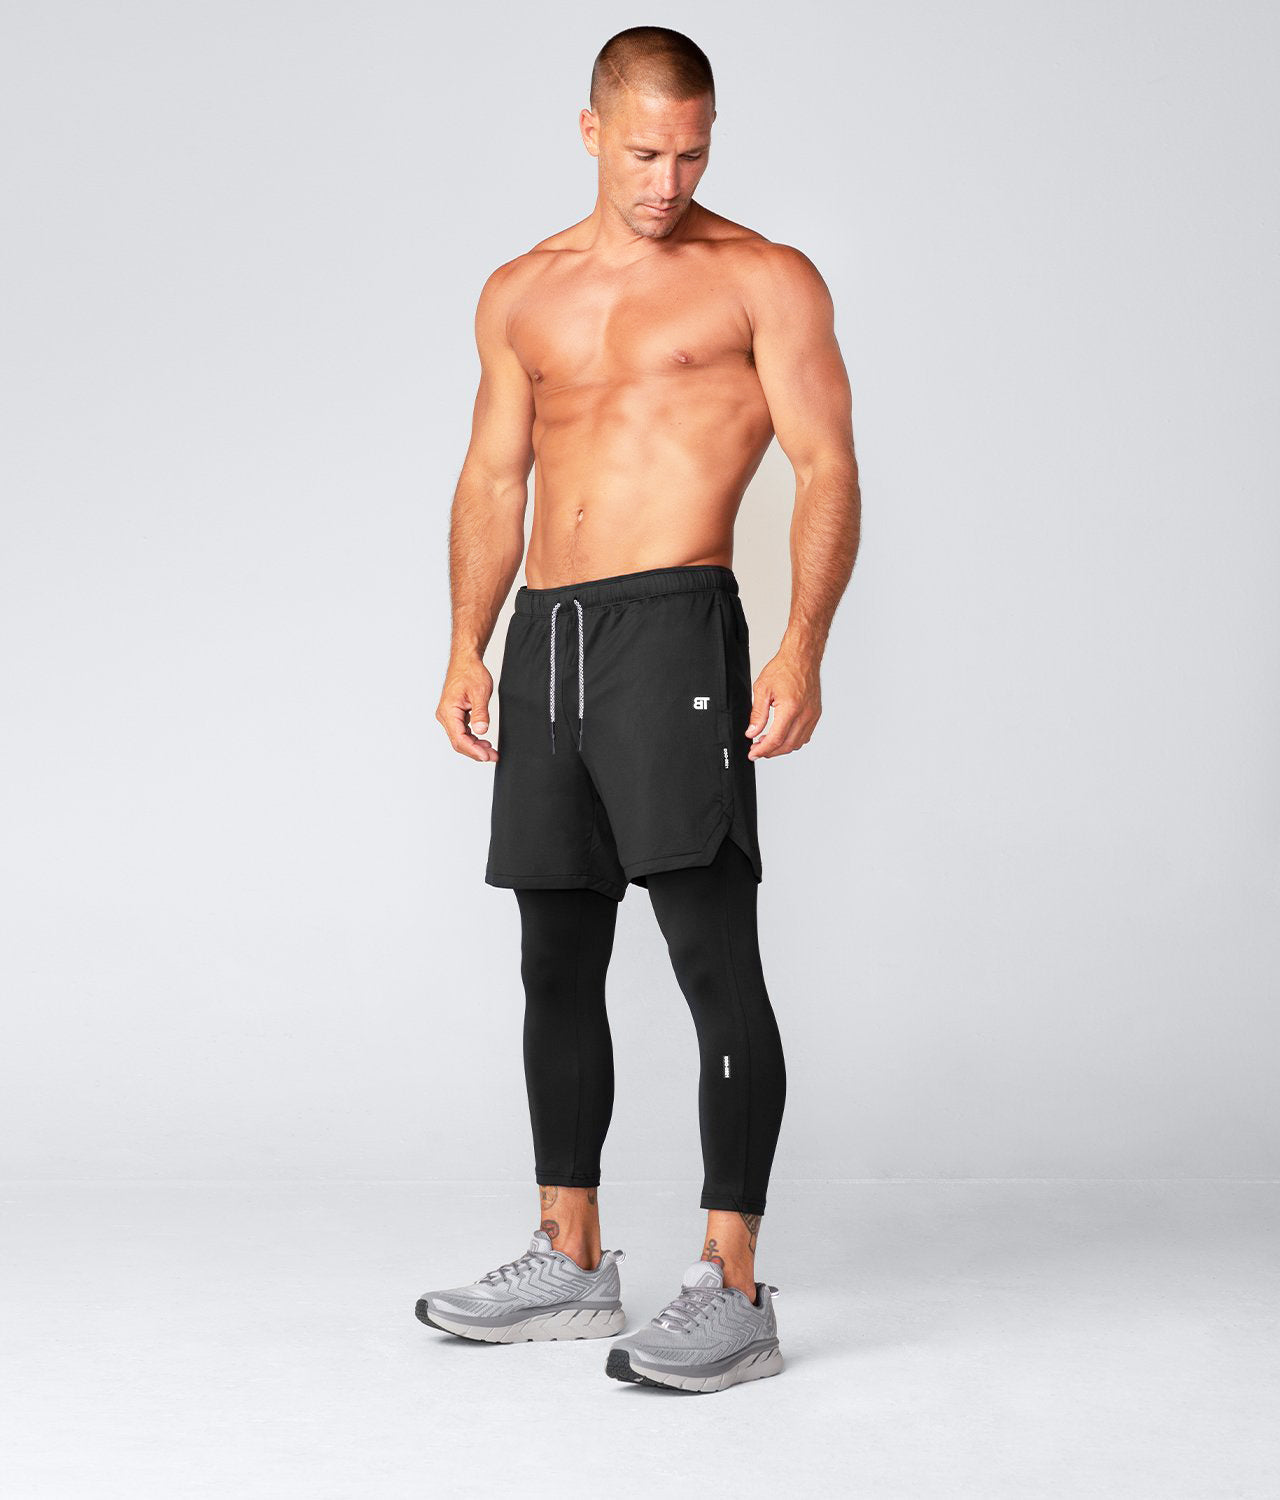 Men's Training Pants, Leggings & Sport Shorts